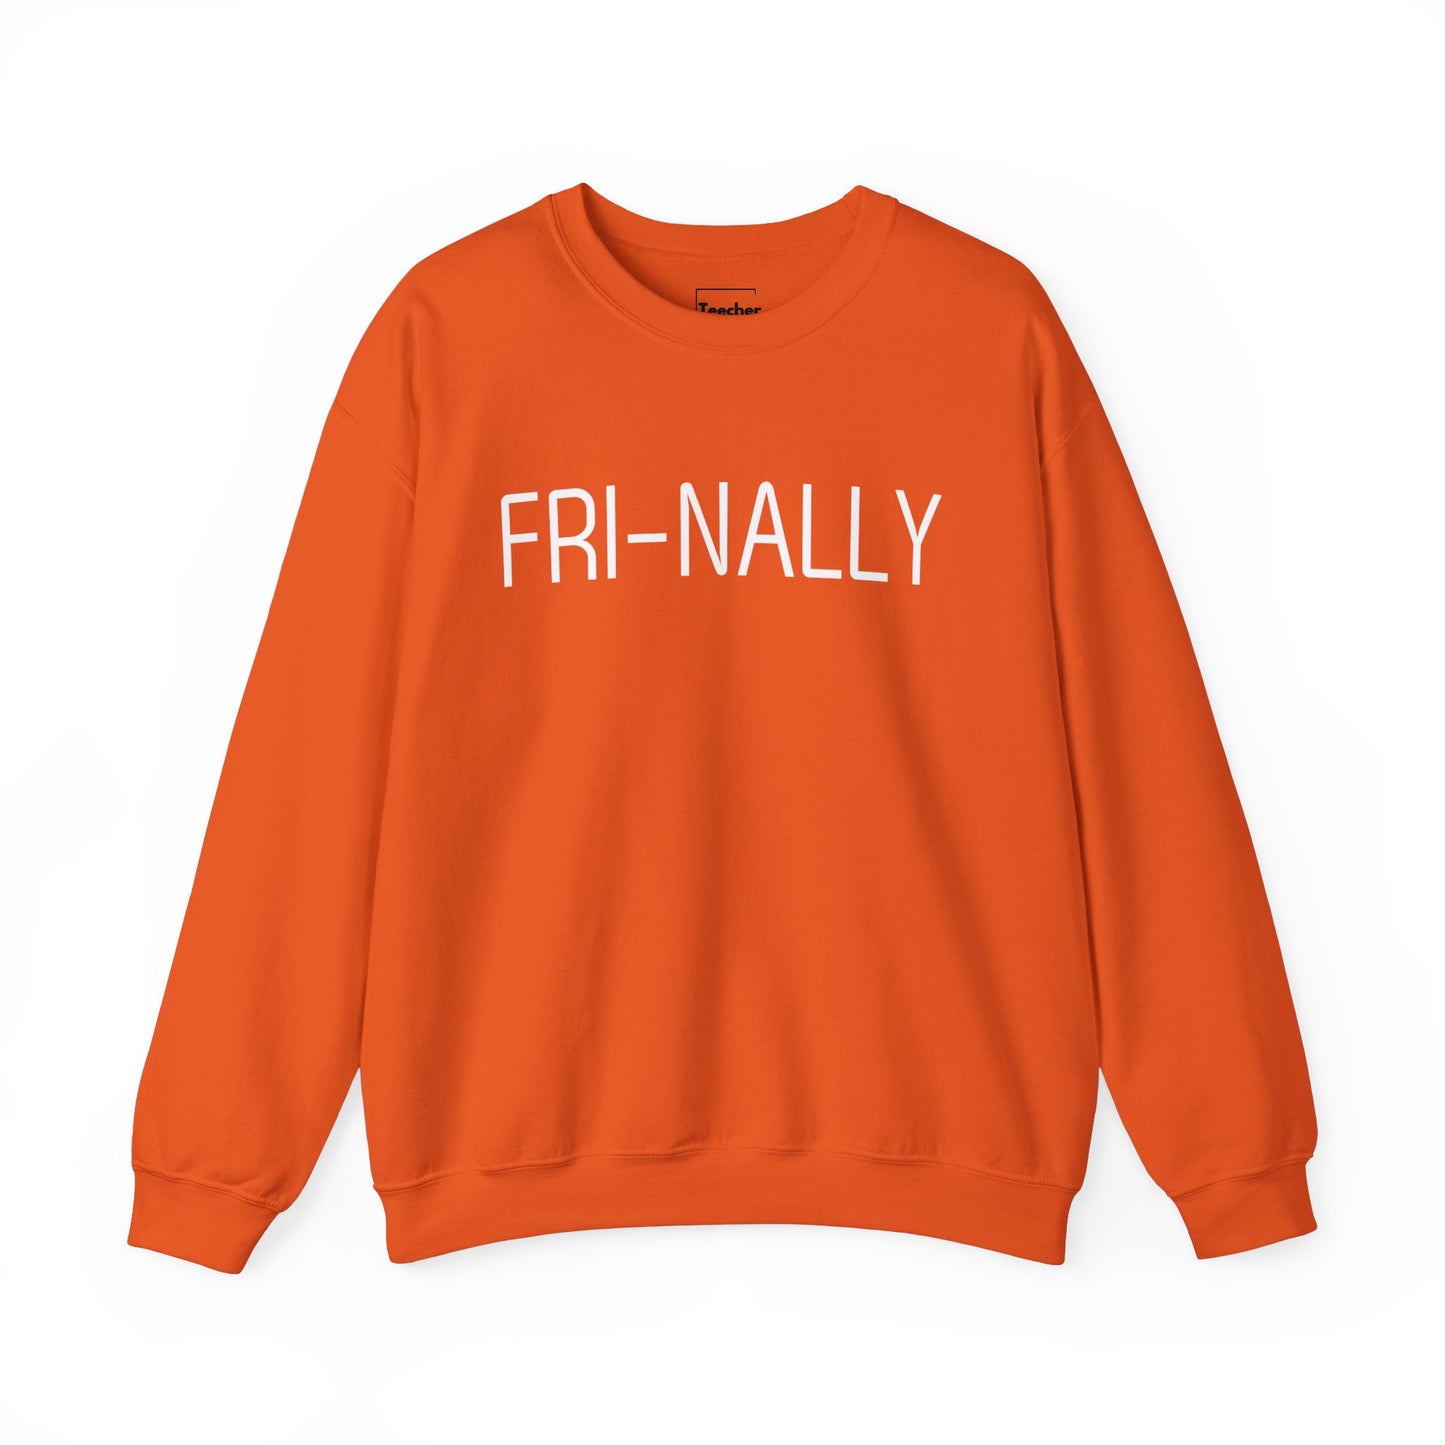 FRI-NALLY Sweatshirt